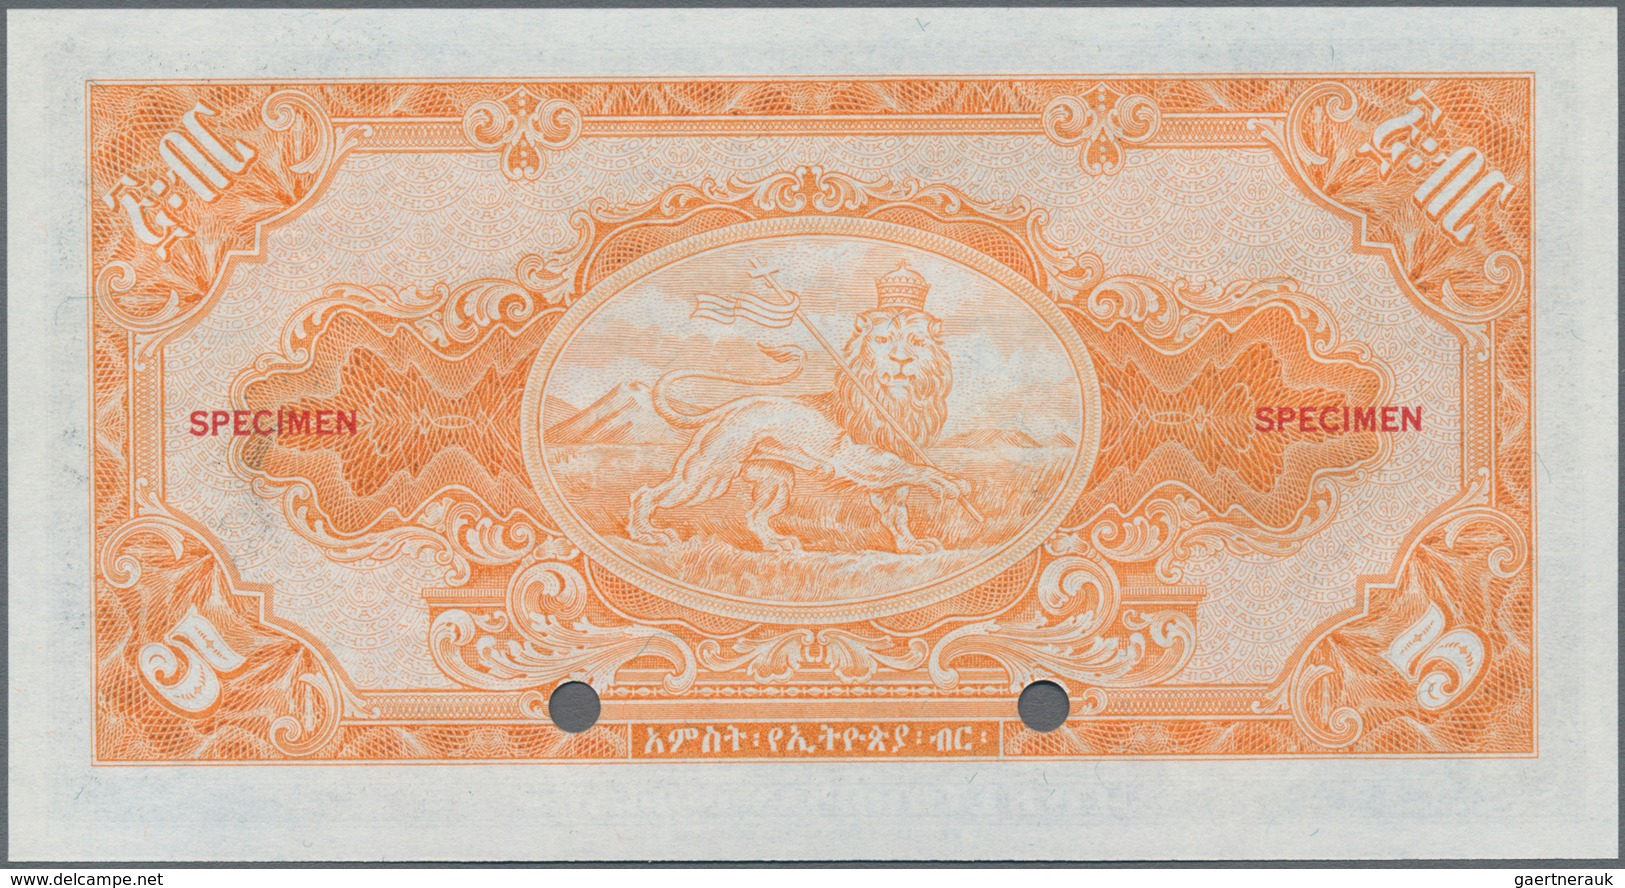 Ethiopia / Äthiopien: The State Bank Of Ethiopia 5 Dollars ND(1945) SPECIMEN With Signature Rozell, - Ethiopie